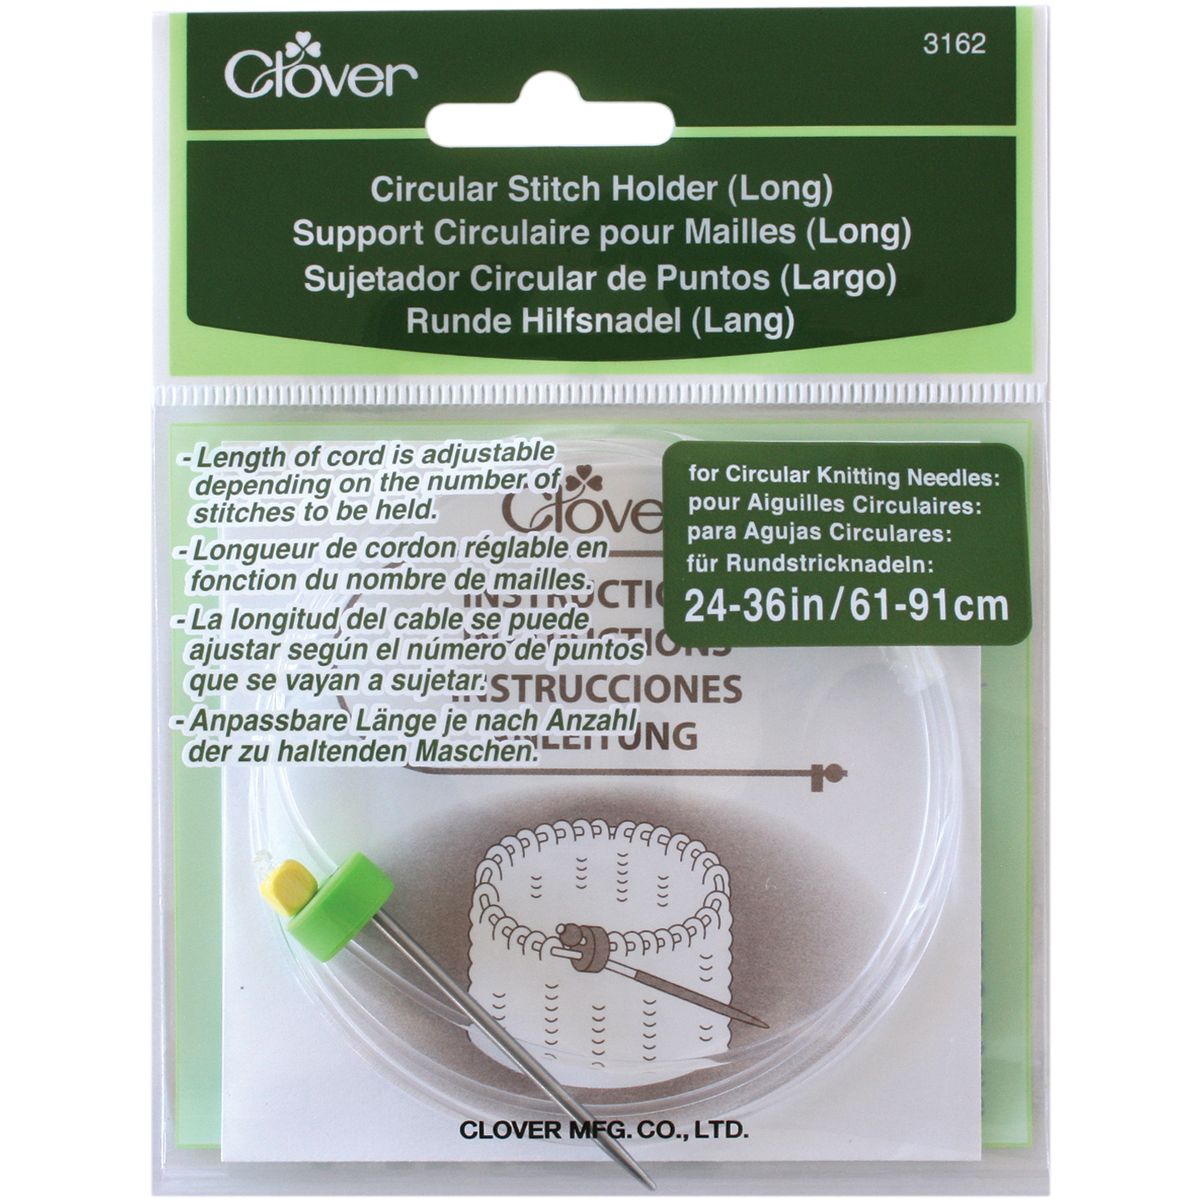 Clover Circular Stitch Holder Long